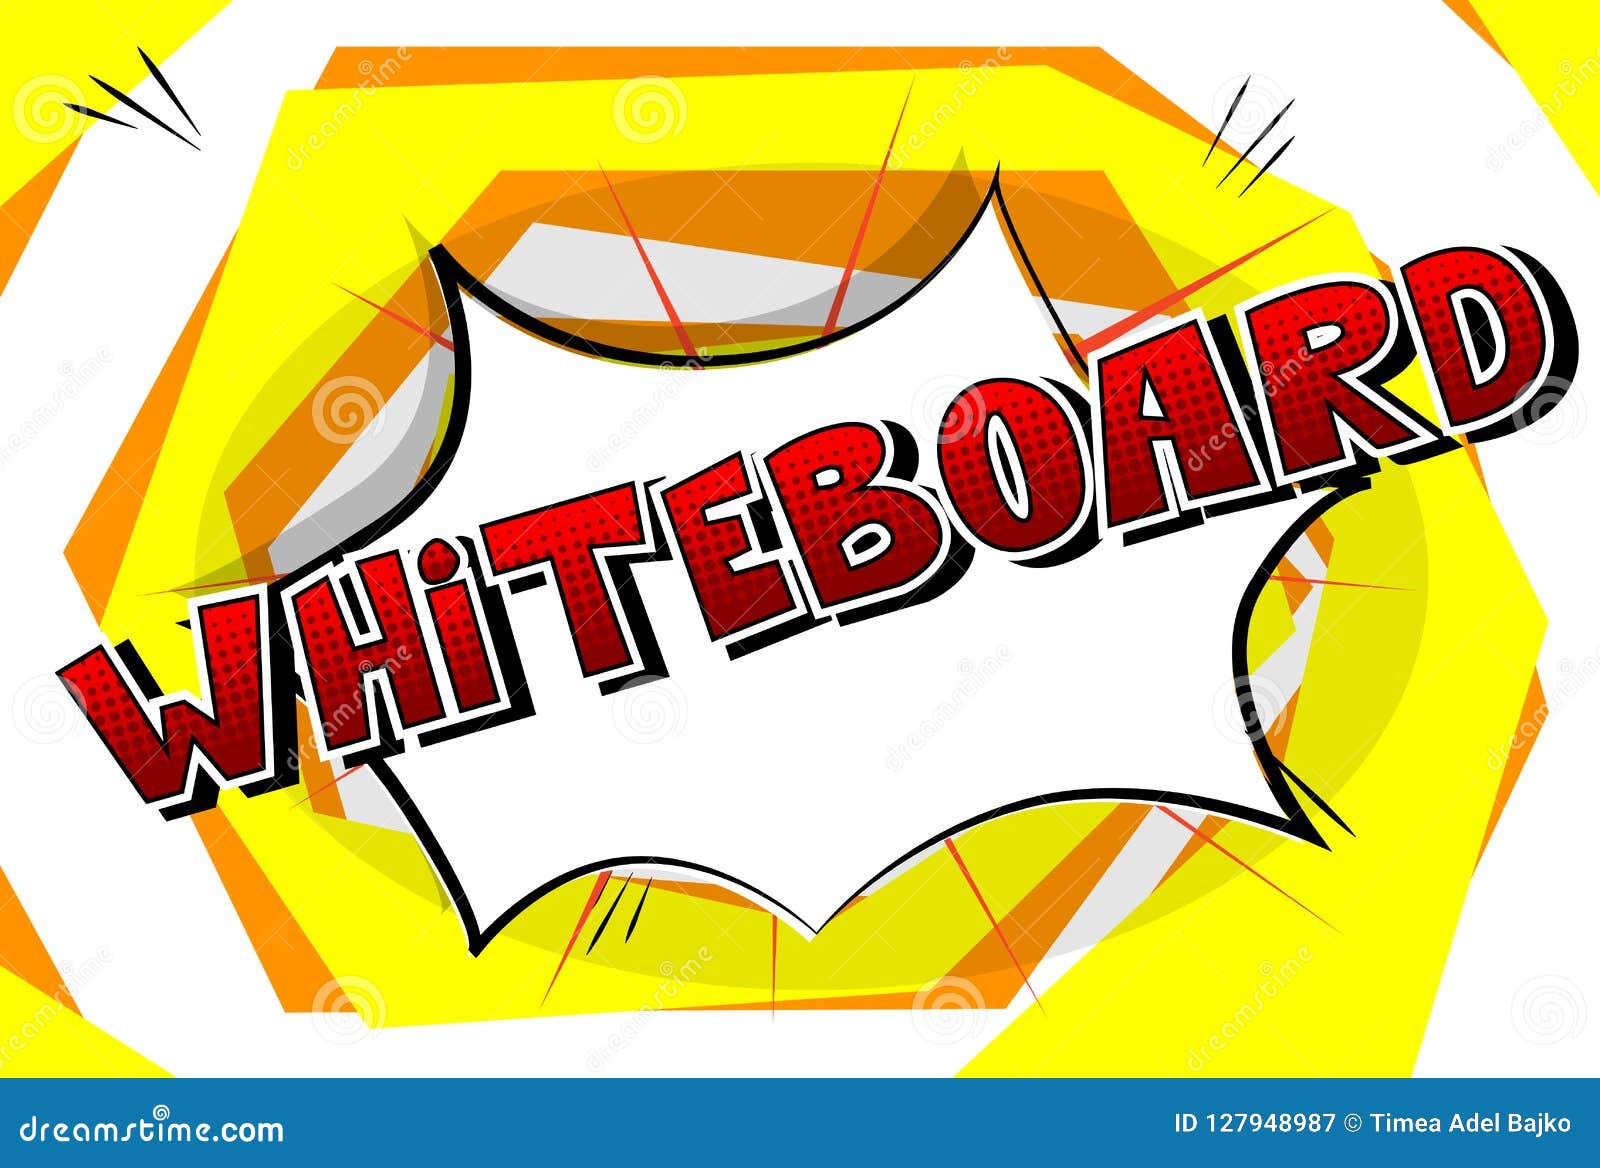 whiteboard - comic book style word